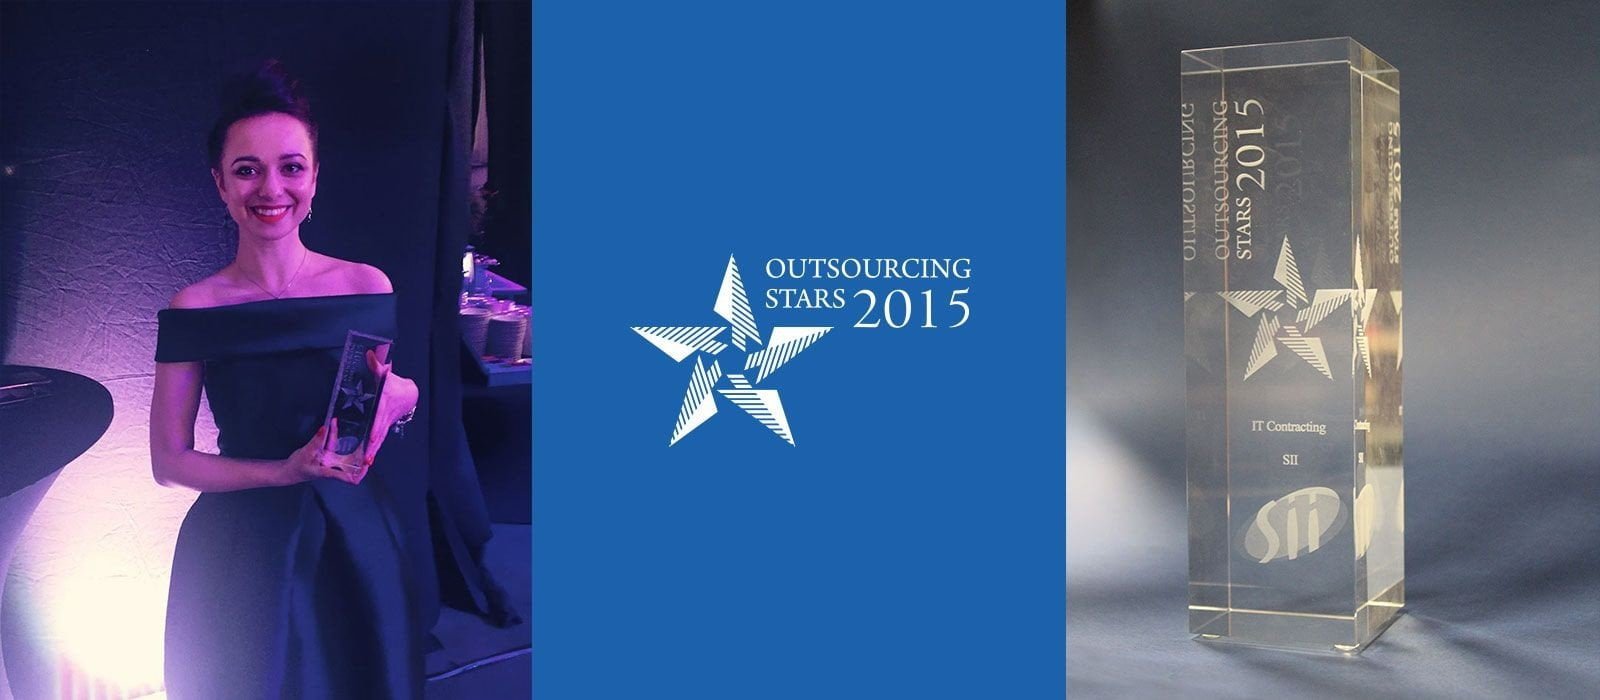 Nagroda outsourcing stars 2015_dla Sii